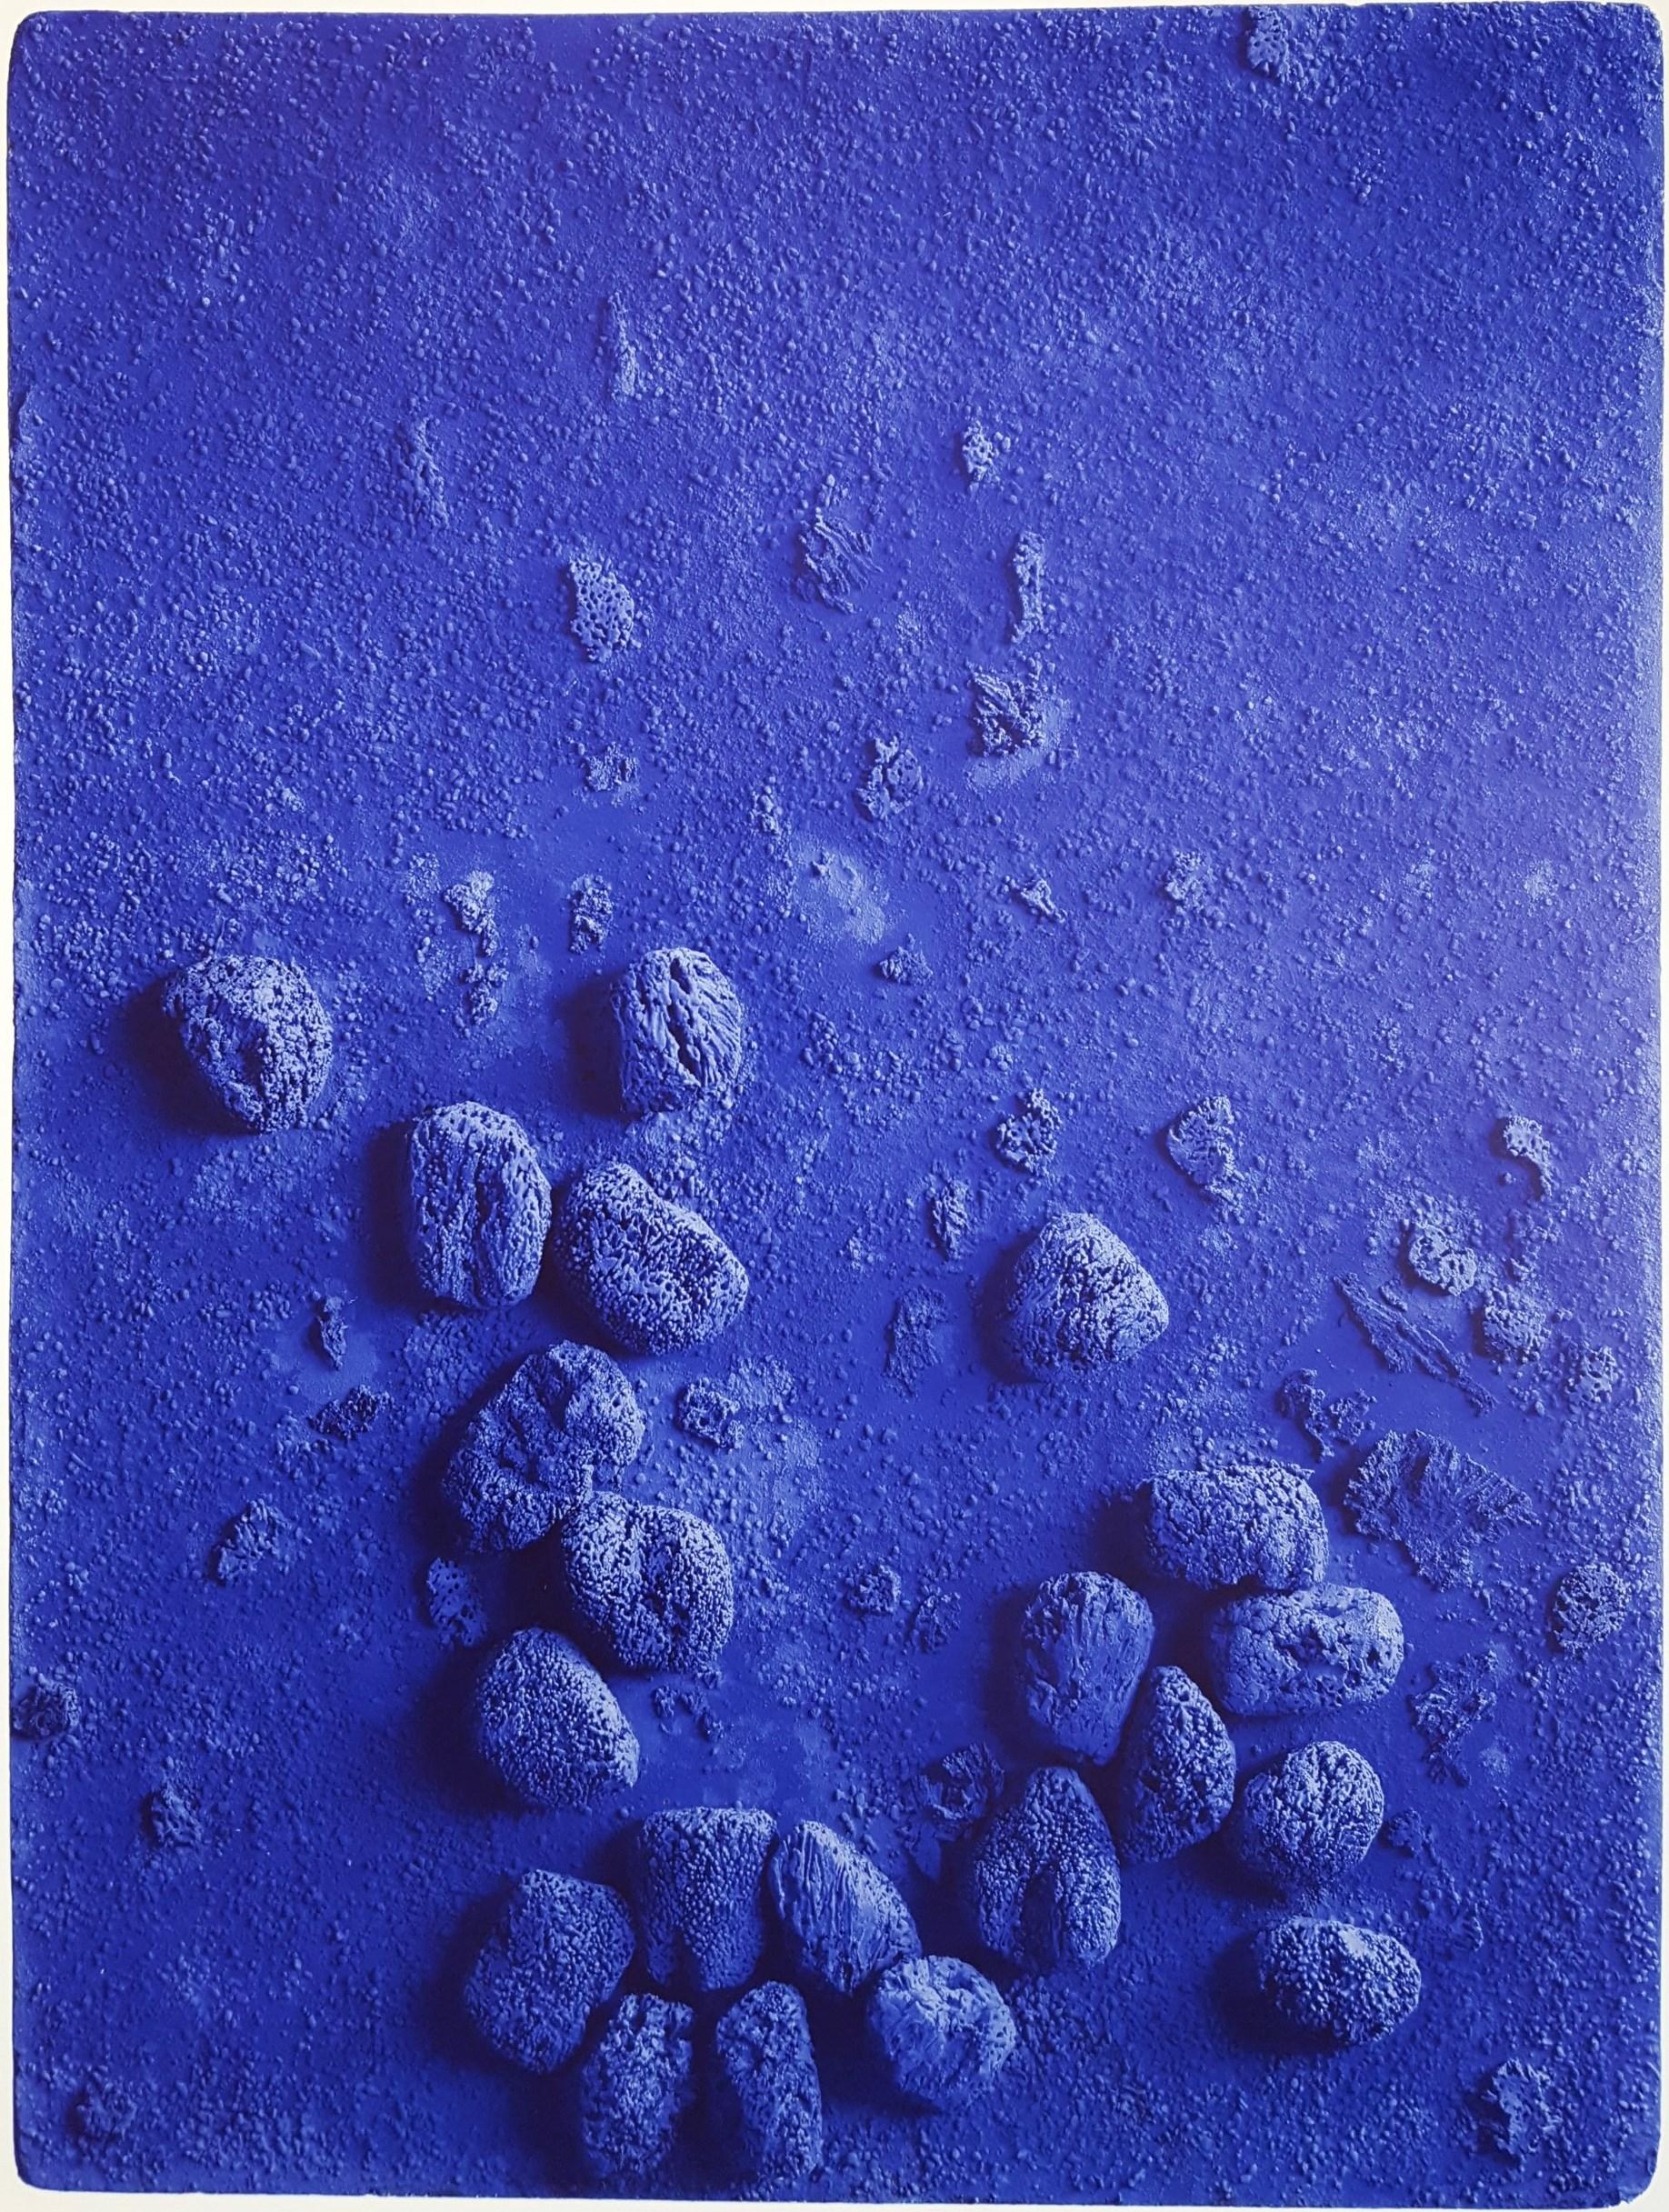 RE 19 (Relief Eponge Bleu) - Print by Yves Klein